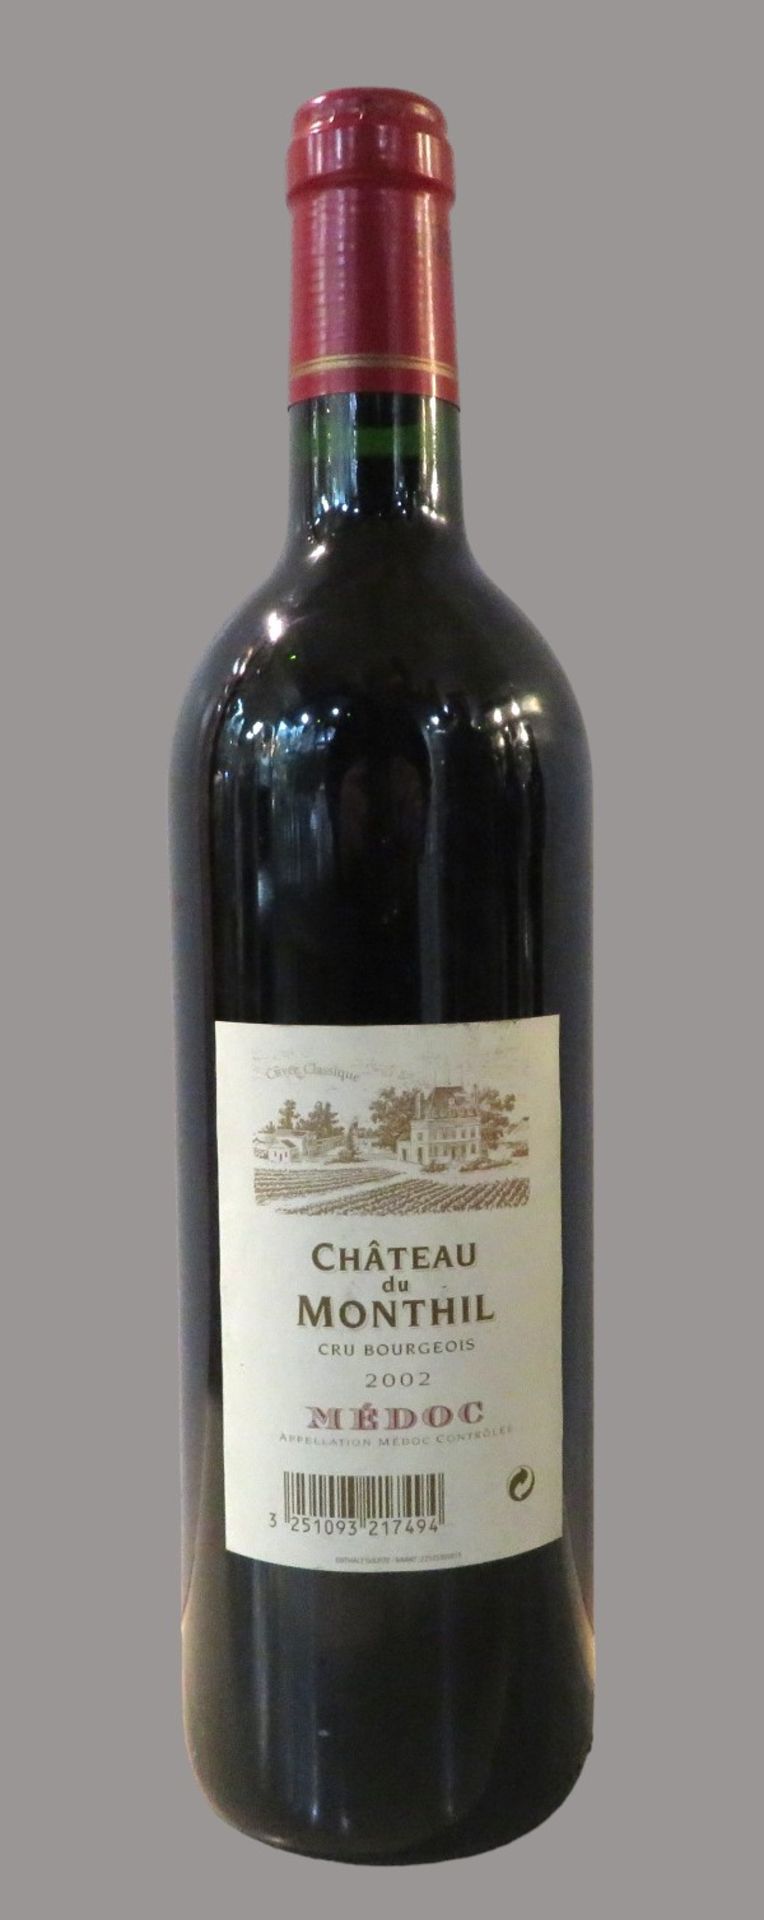 3 Flaschen Rotwein, Frankreich, Chateau du Monthil, 2002, Médoc.